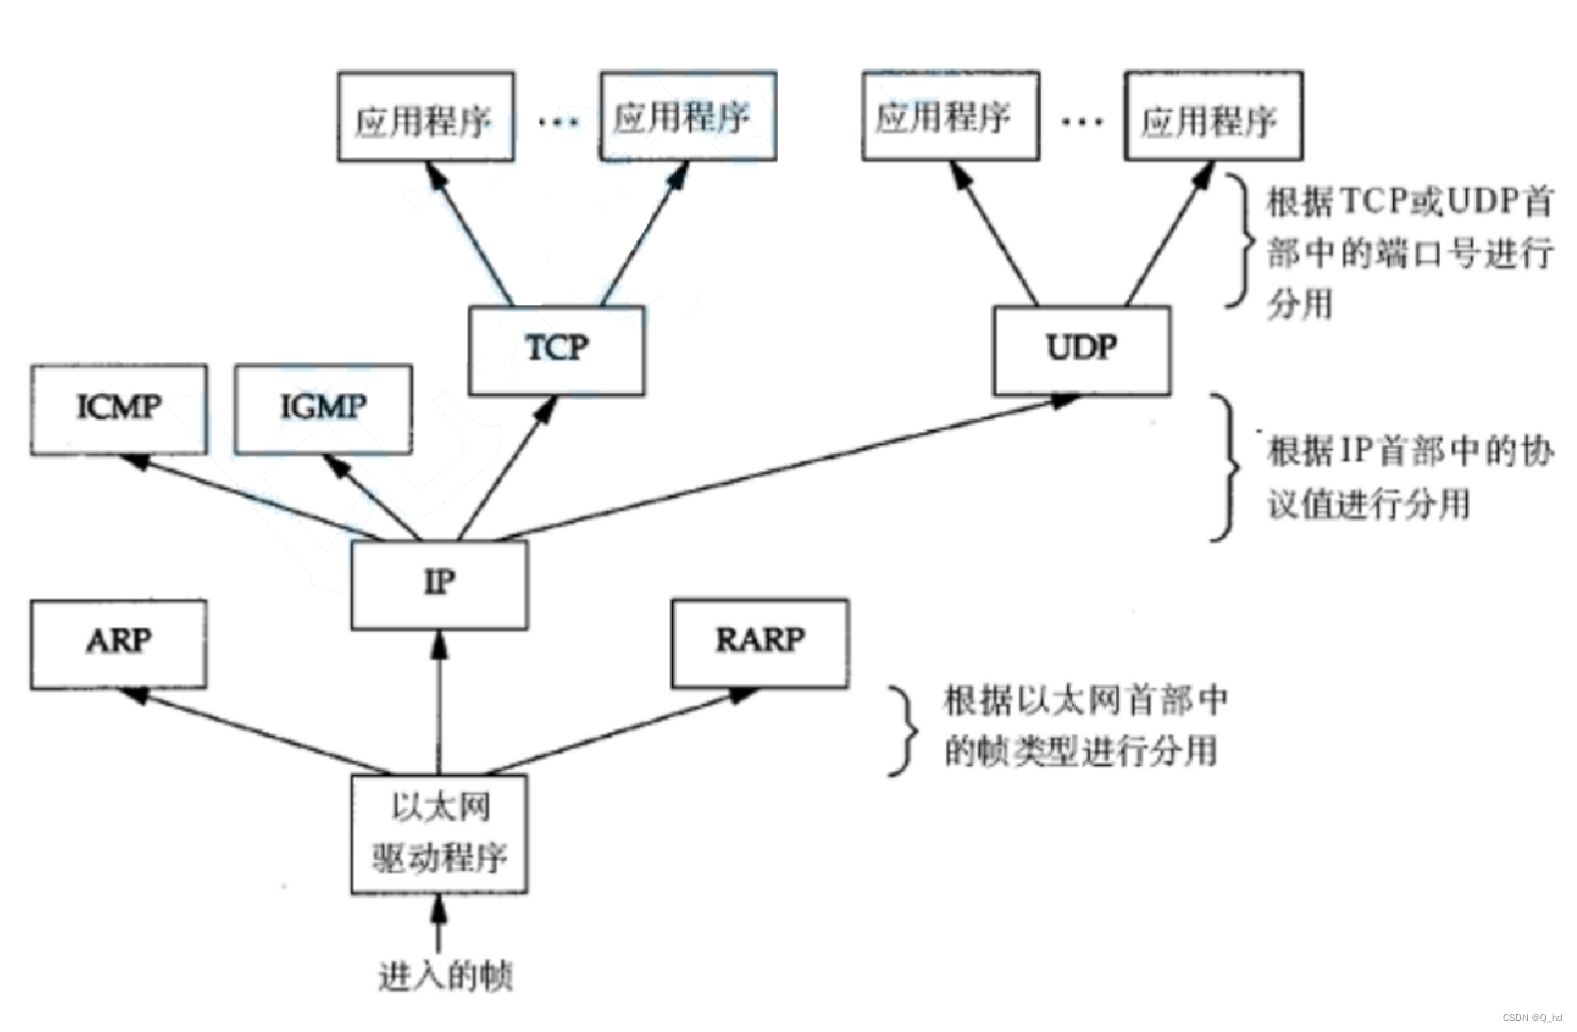 【Linux】计算机网络基础：协议、分层结构与数据传输解析